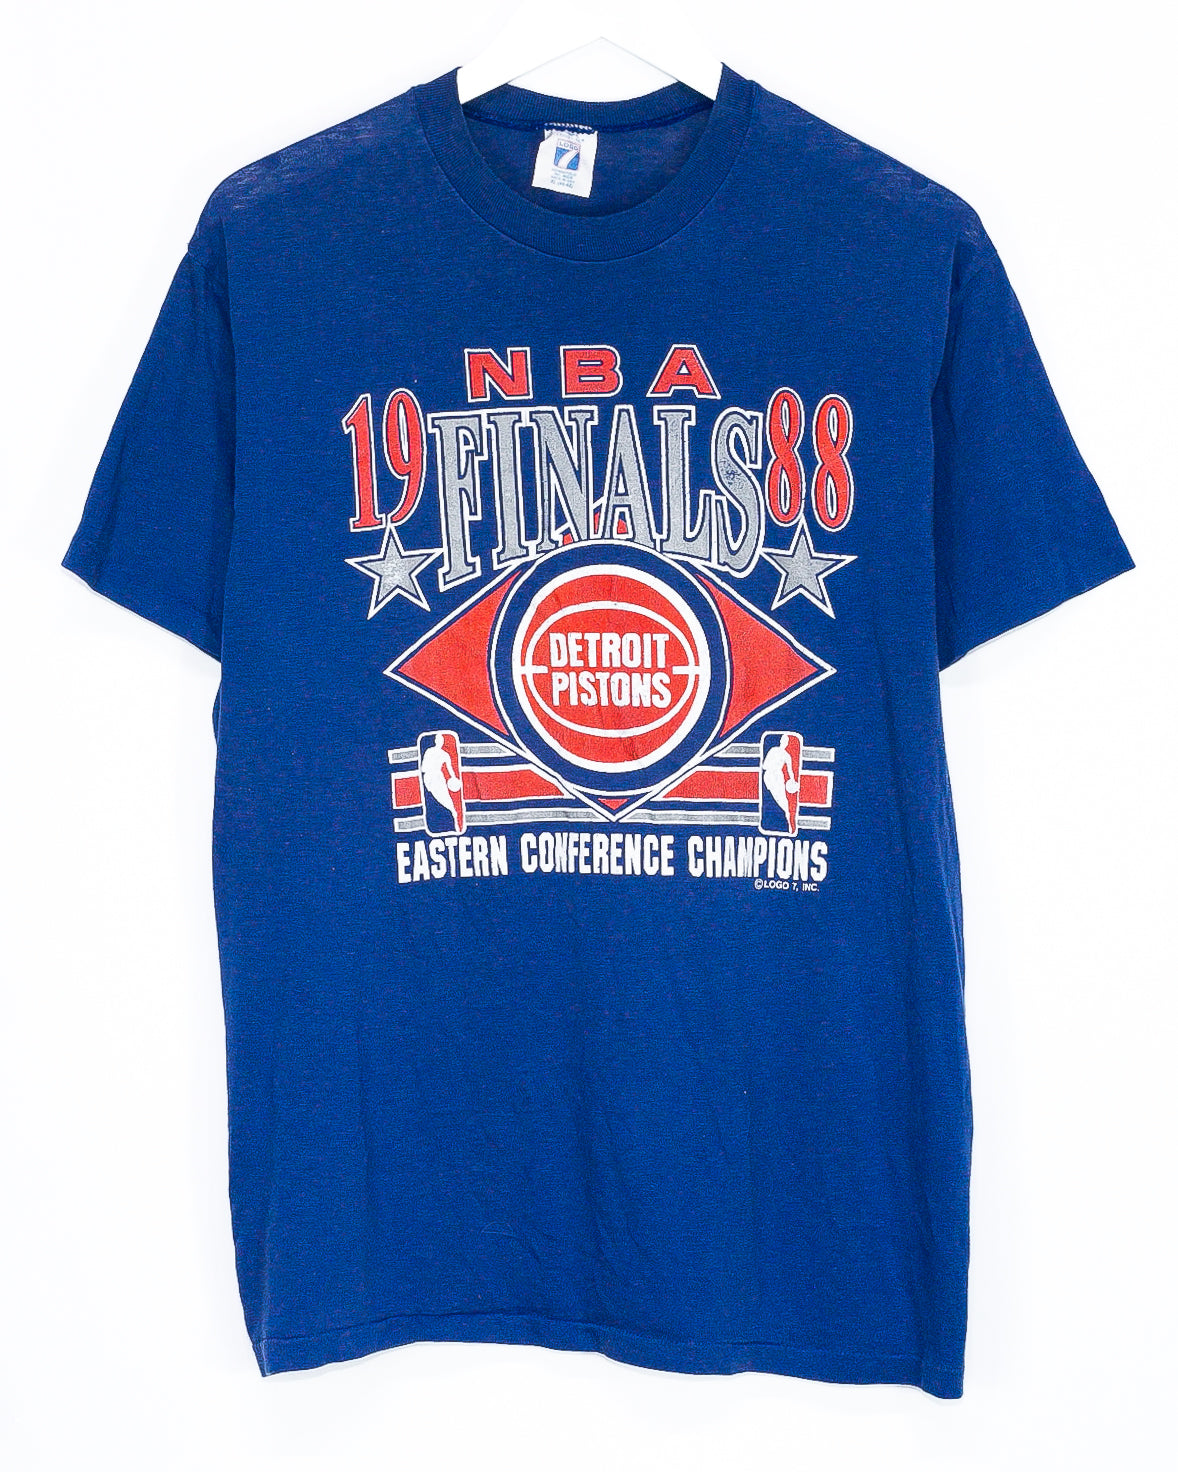 Vintage Detroit Pistons NBA ‘88 T-Shirt (L/XL)